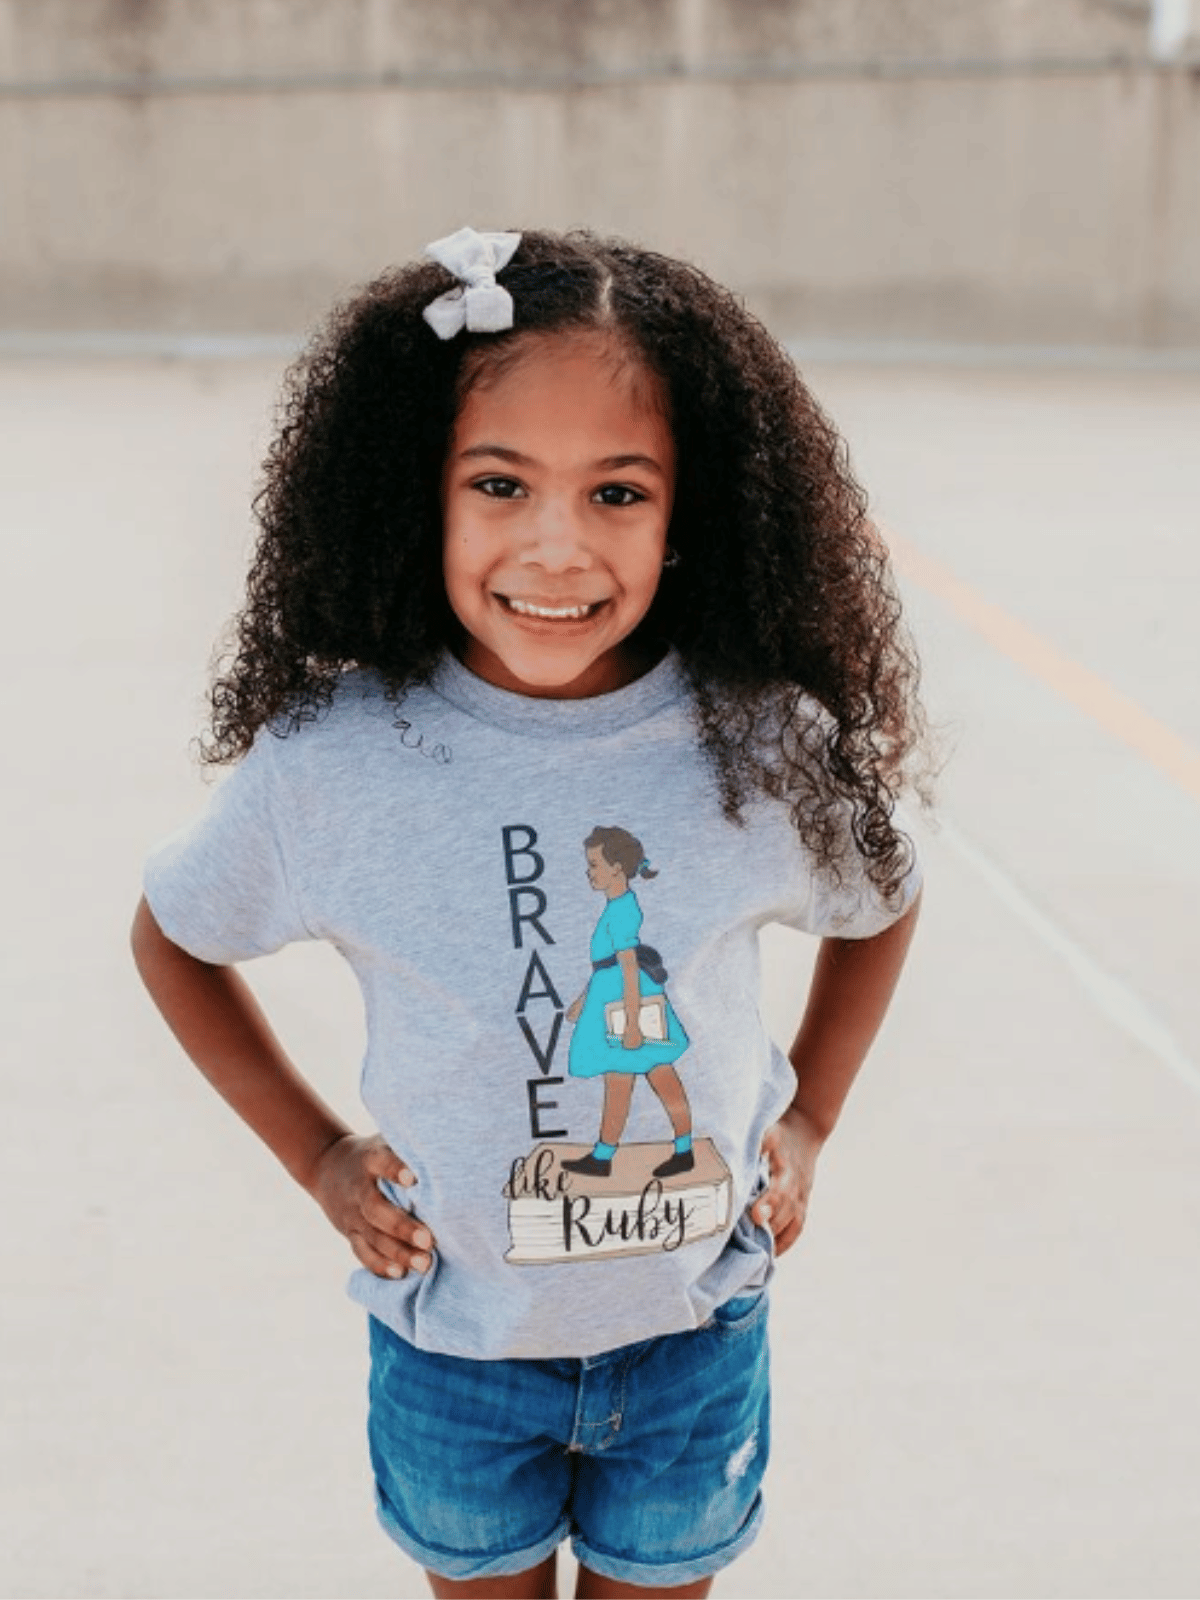 Kids Brave like Ruby Bridges Black History Shirt